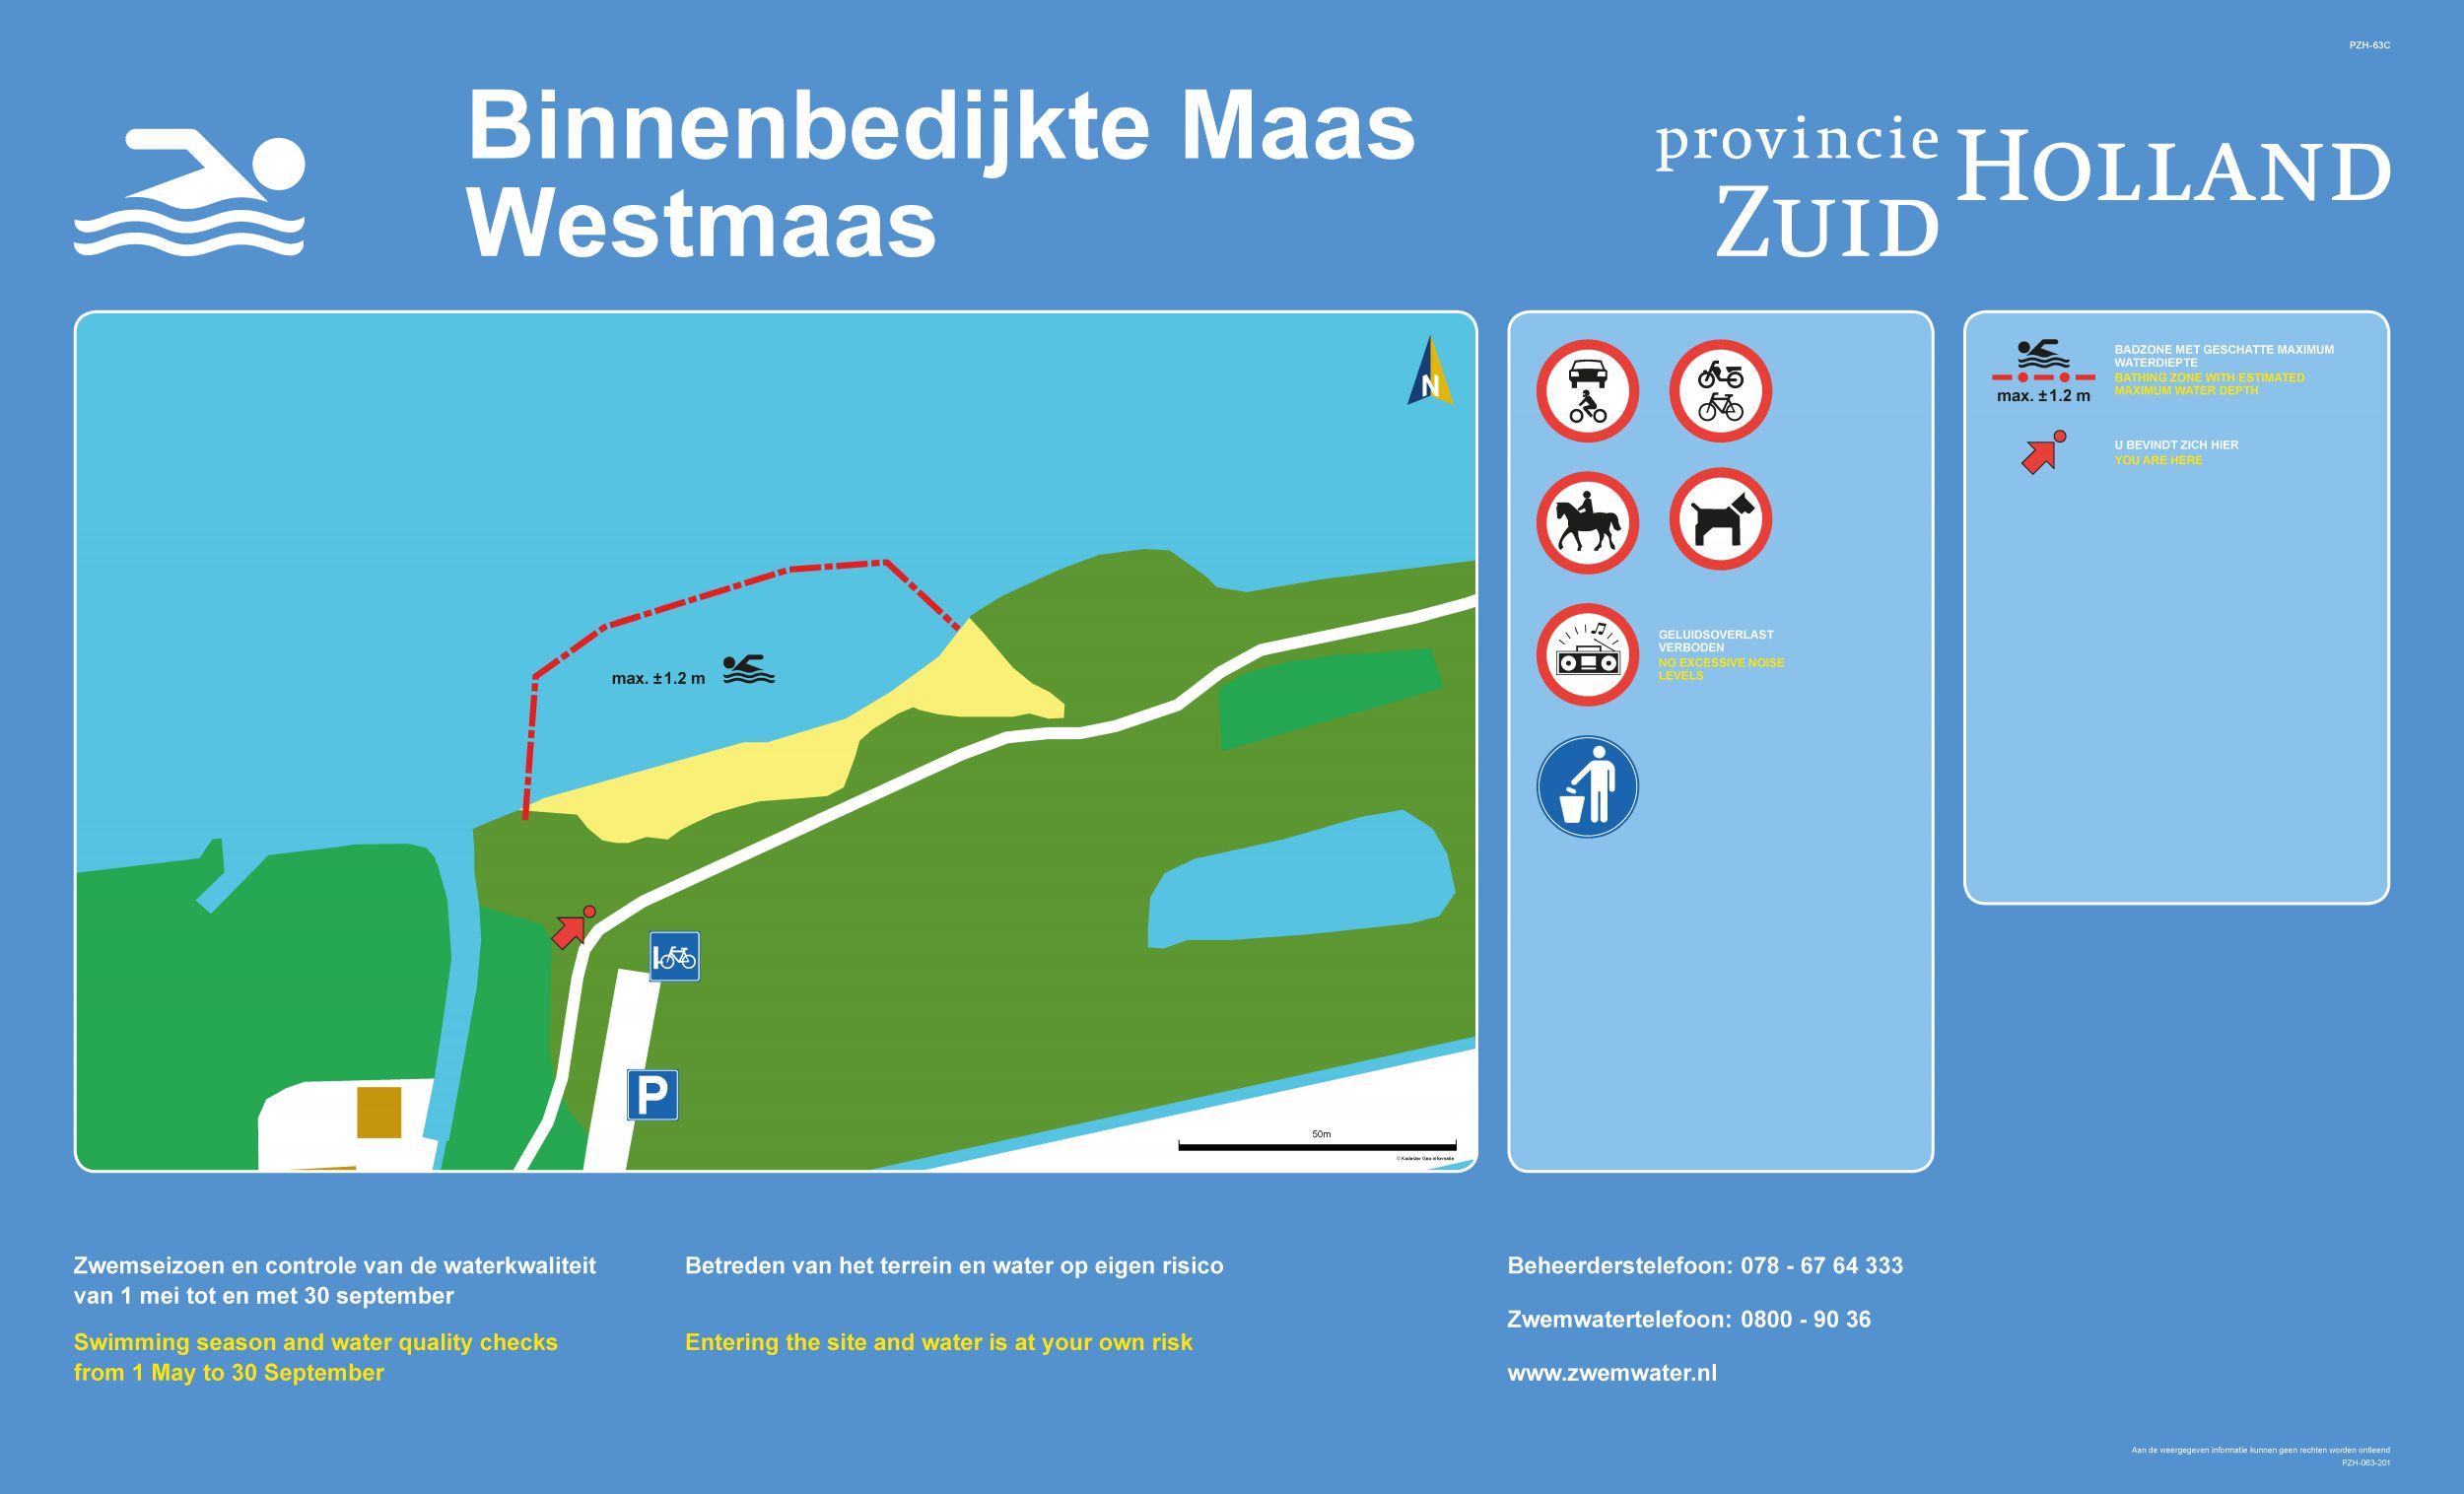 The information board at the swimming location Binnenbedijkte Maas Westmaas